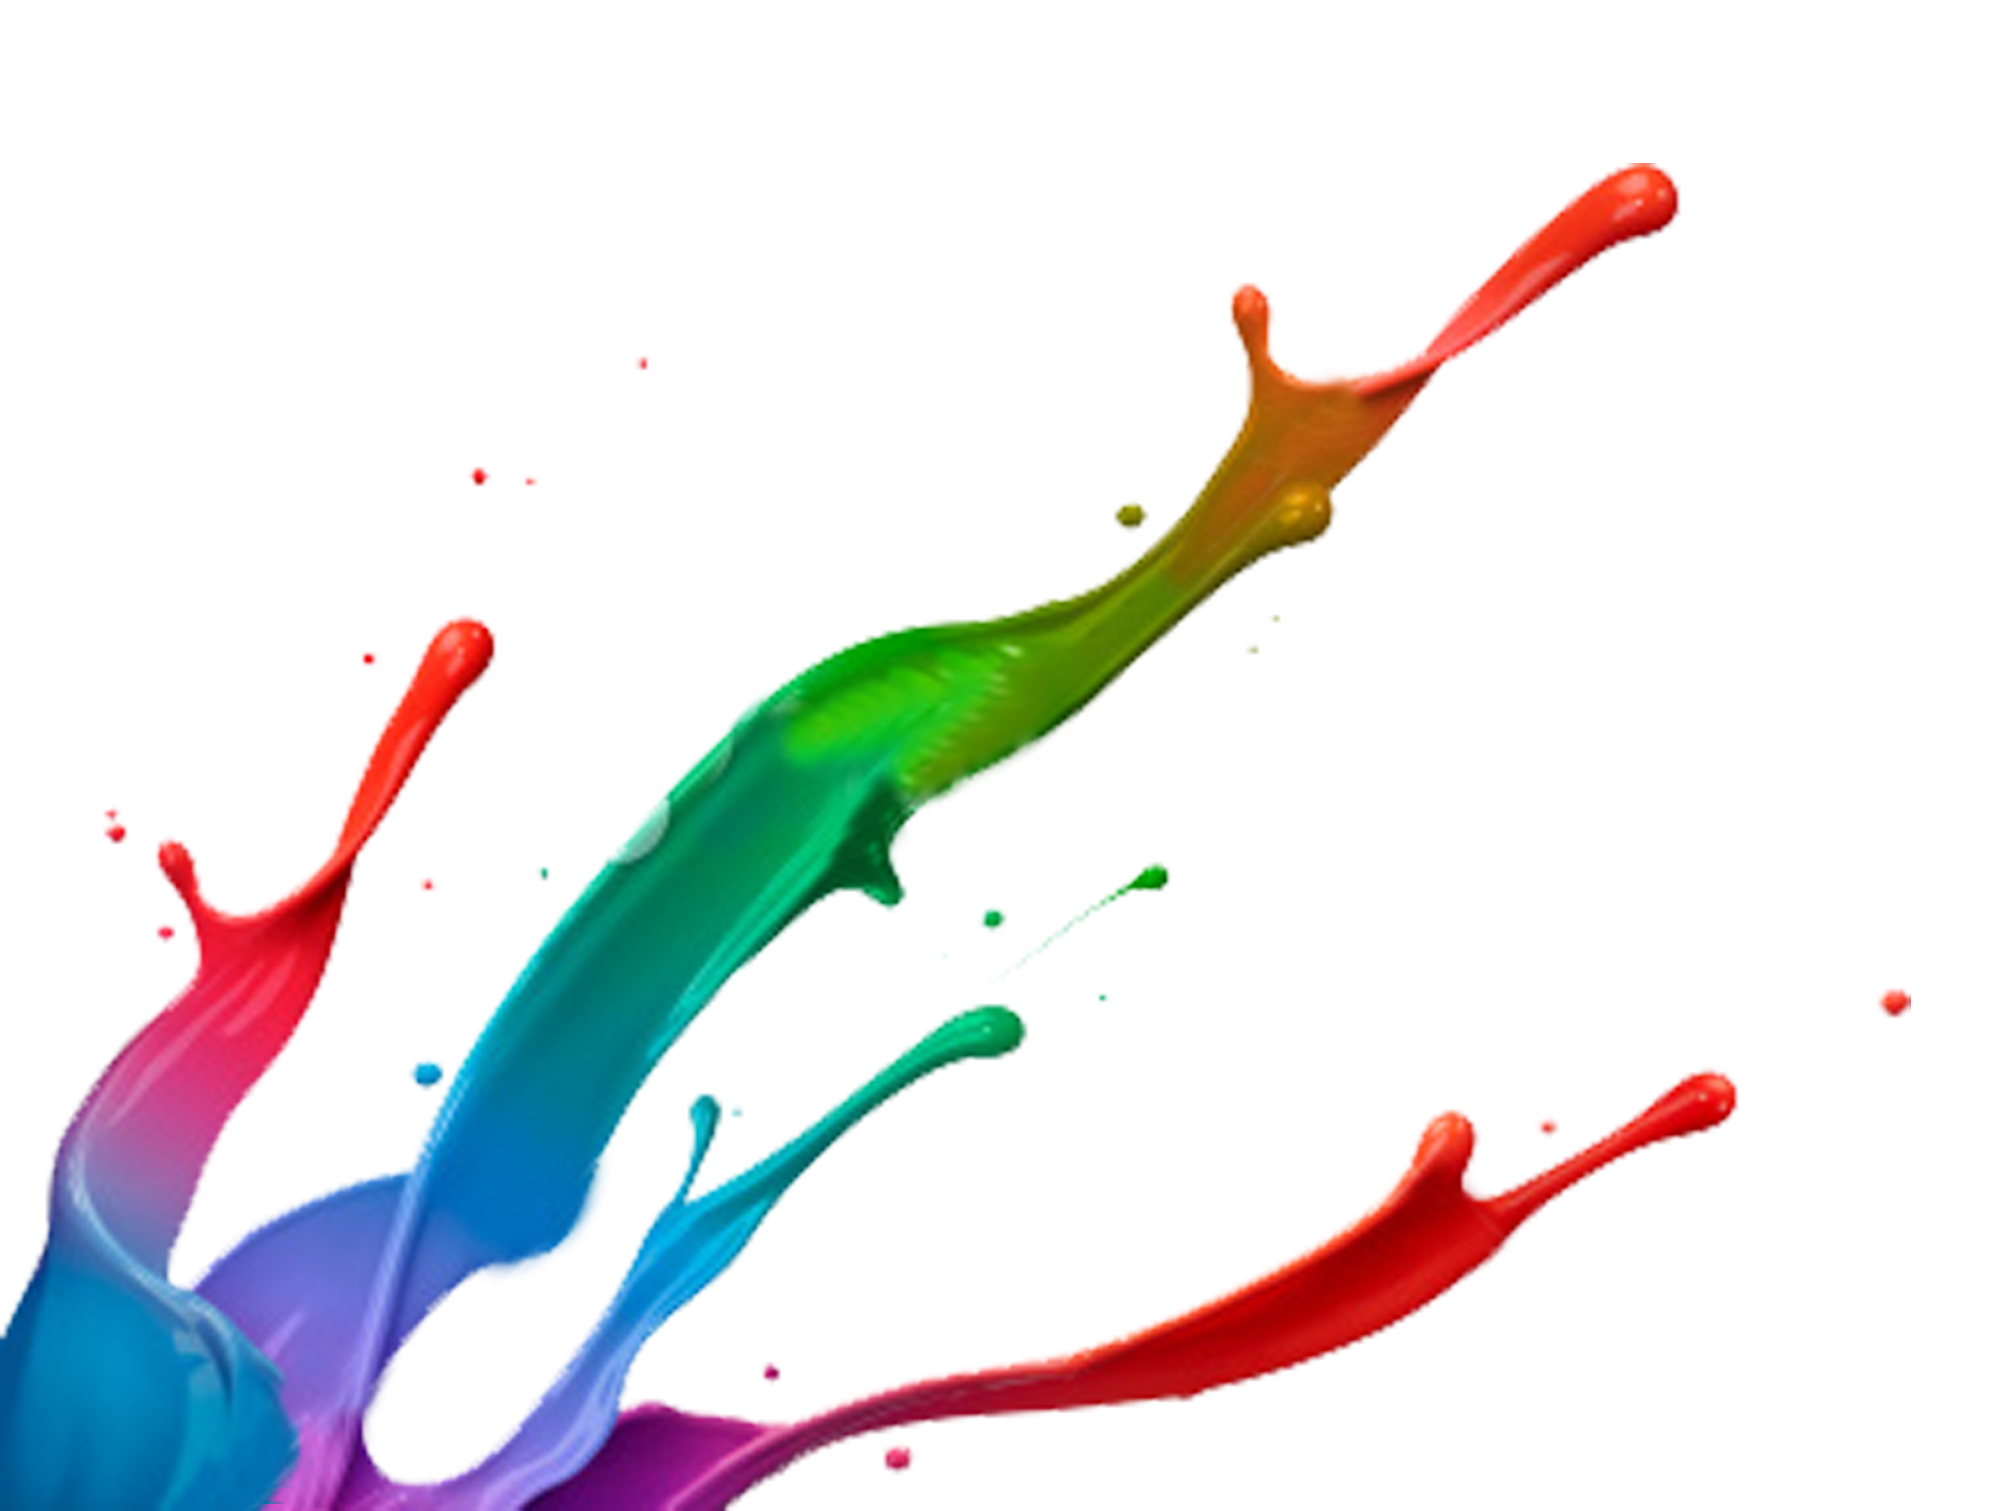 Paint Splash | Free Download Clip Art | Free Clip Art | on Clipart ...